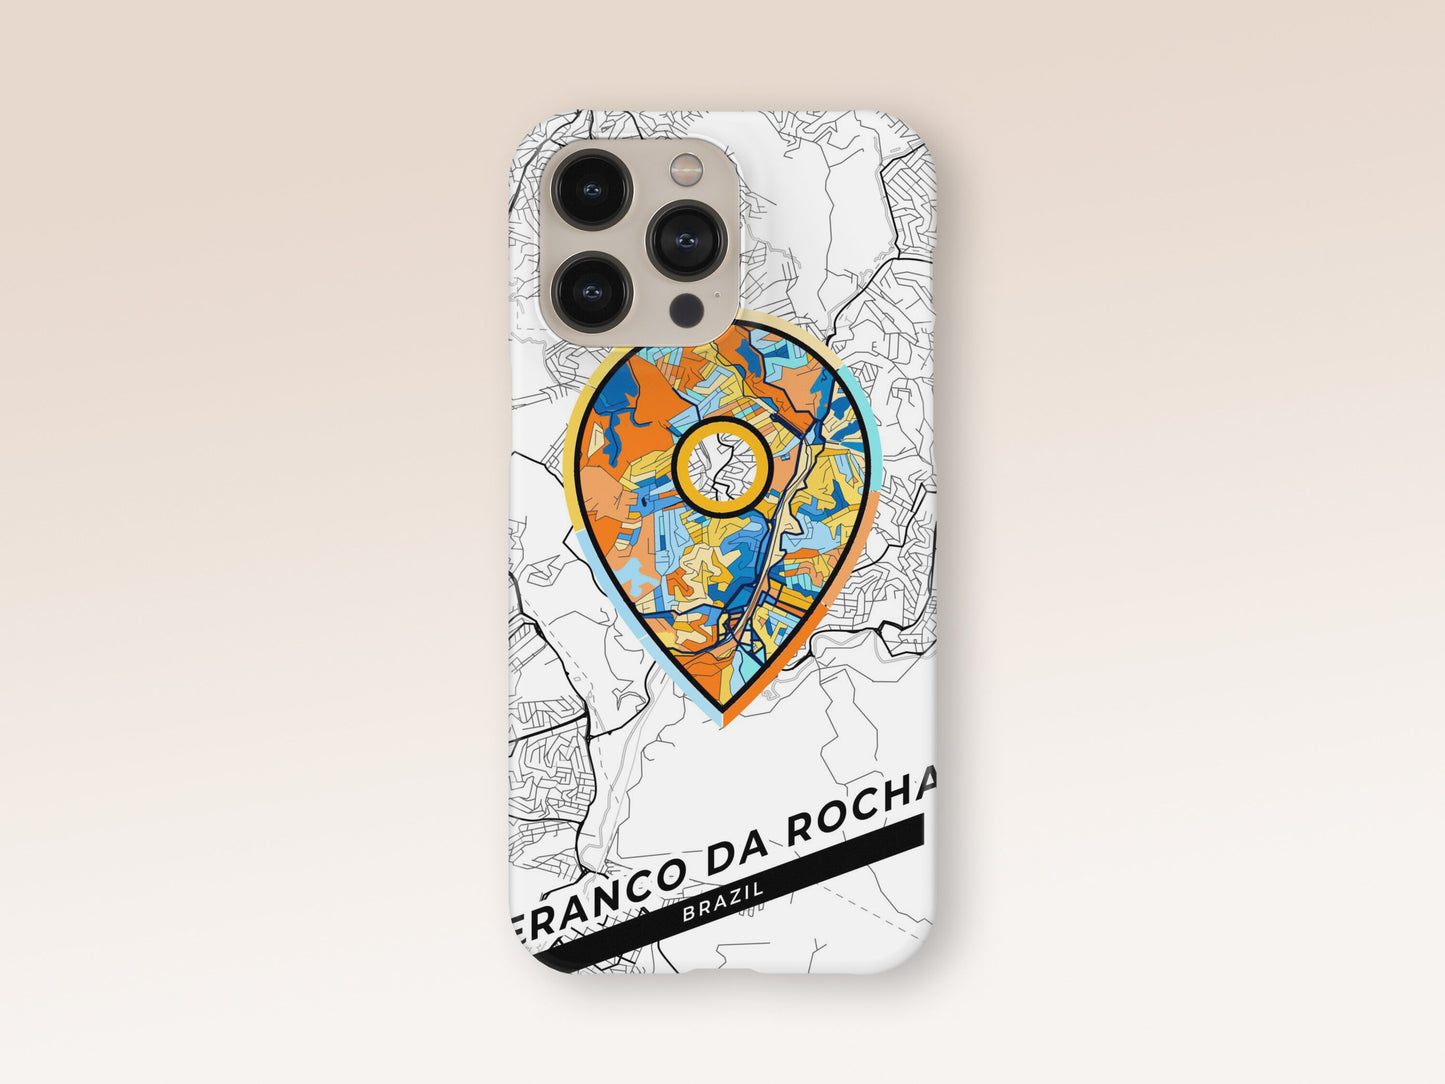 Franco Da Rocha Brazil slim phone case with colorful icon. Birthday, wedding or housewarming gift. Couple match cases. 1